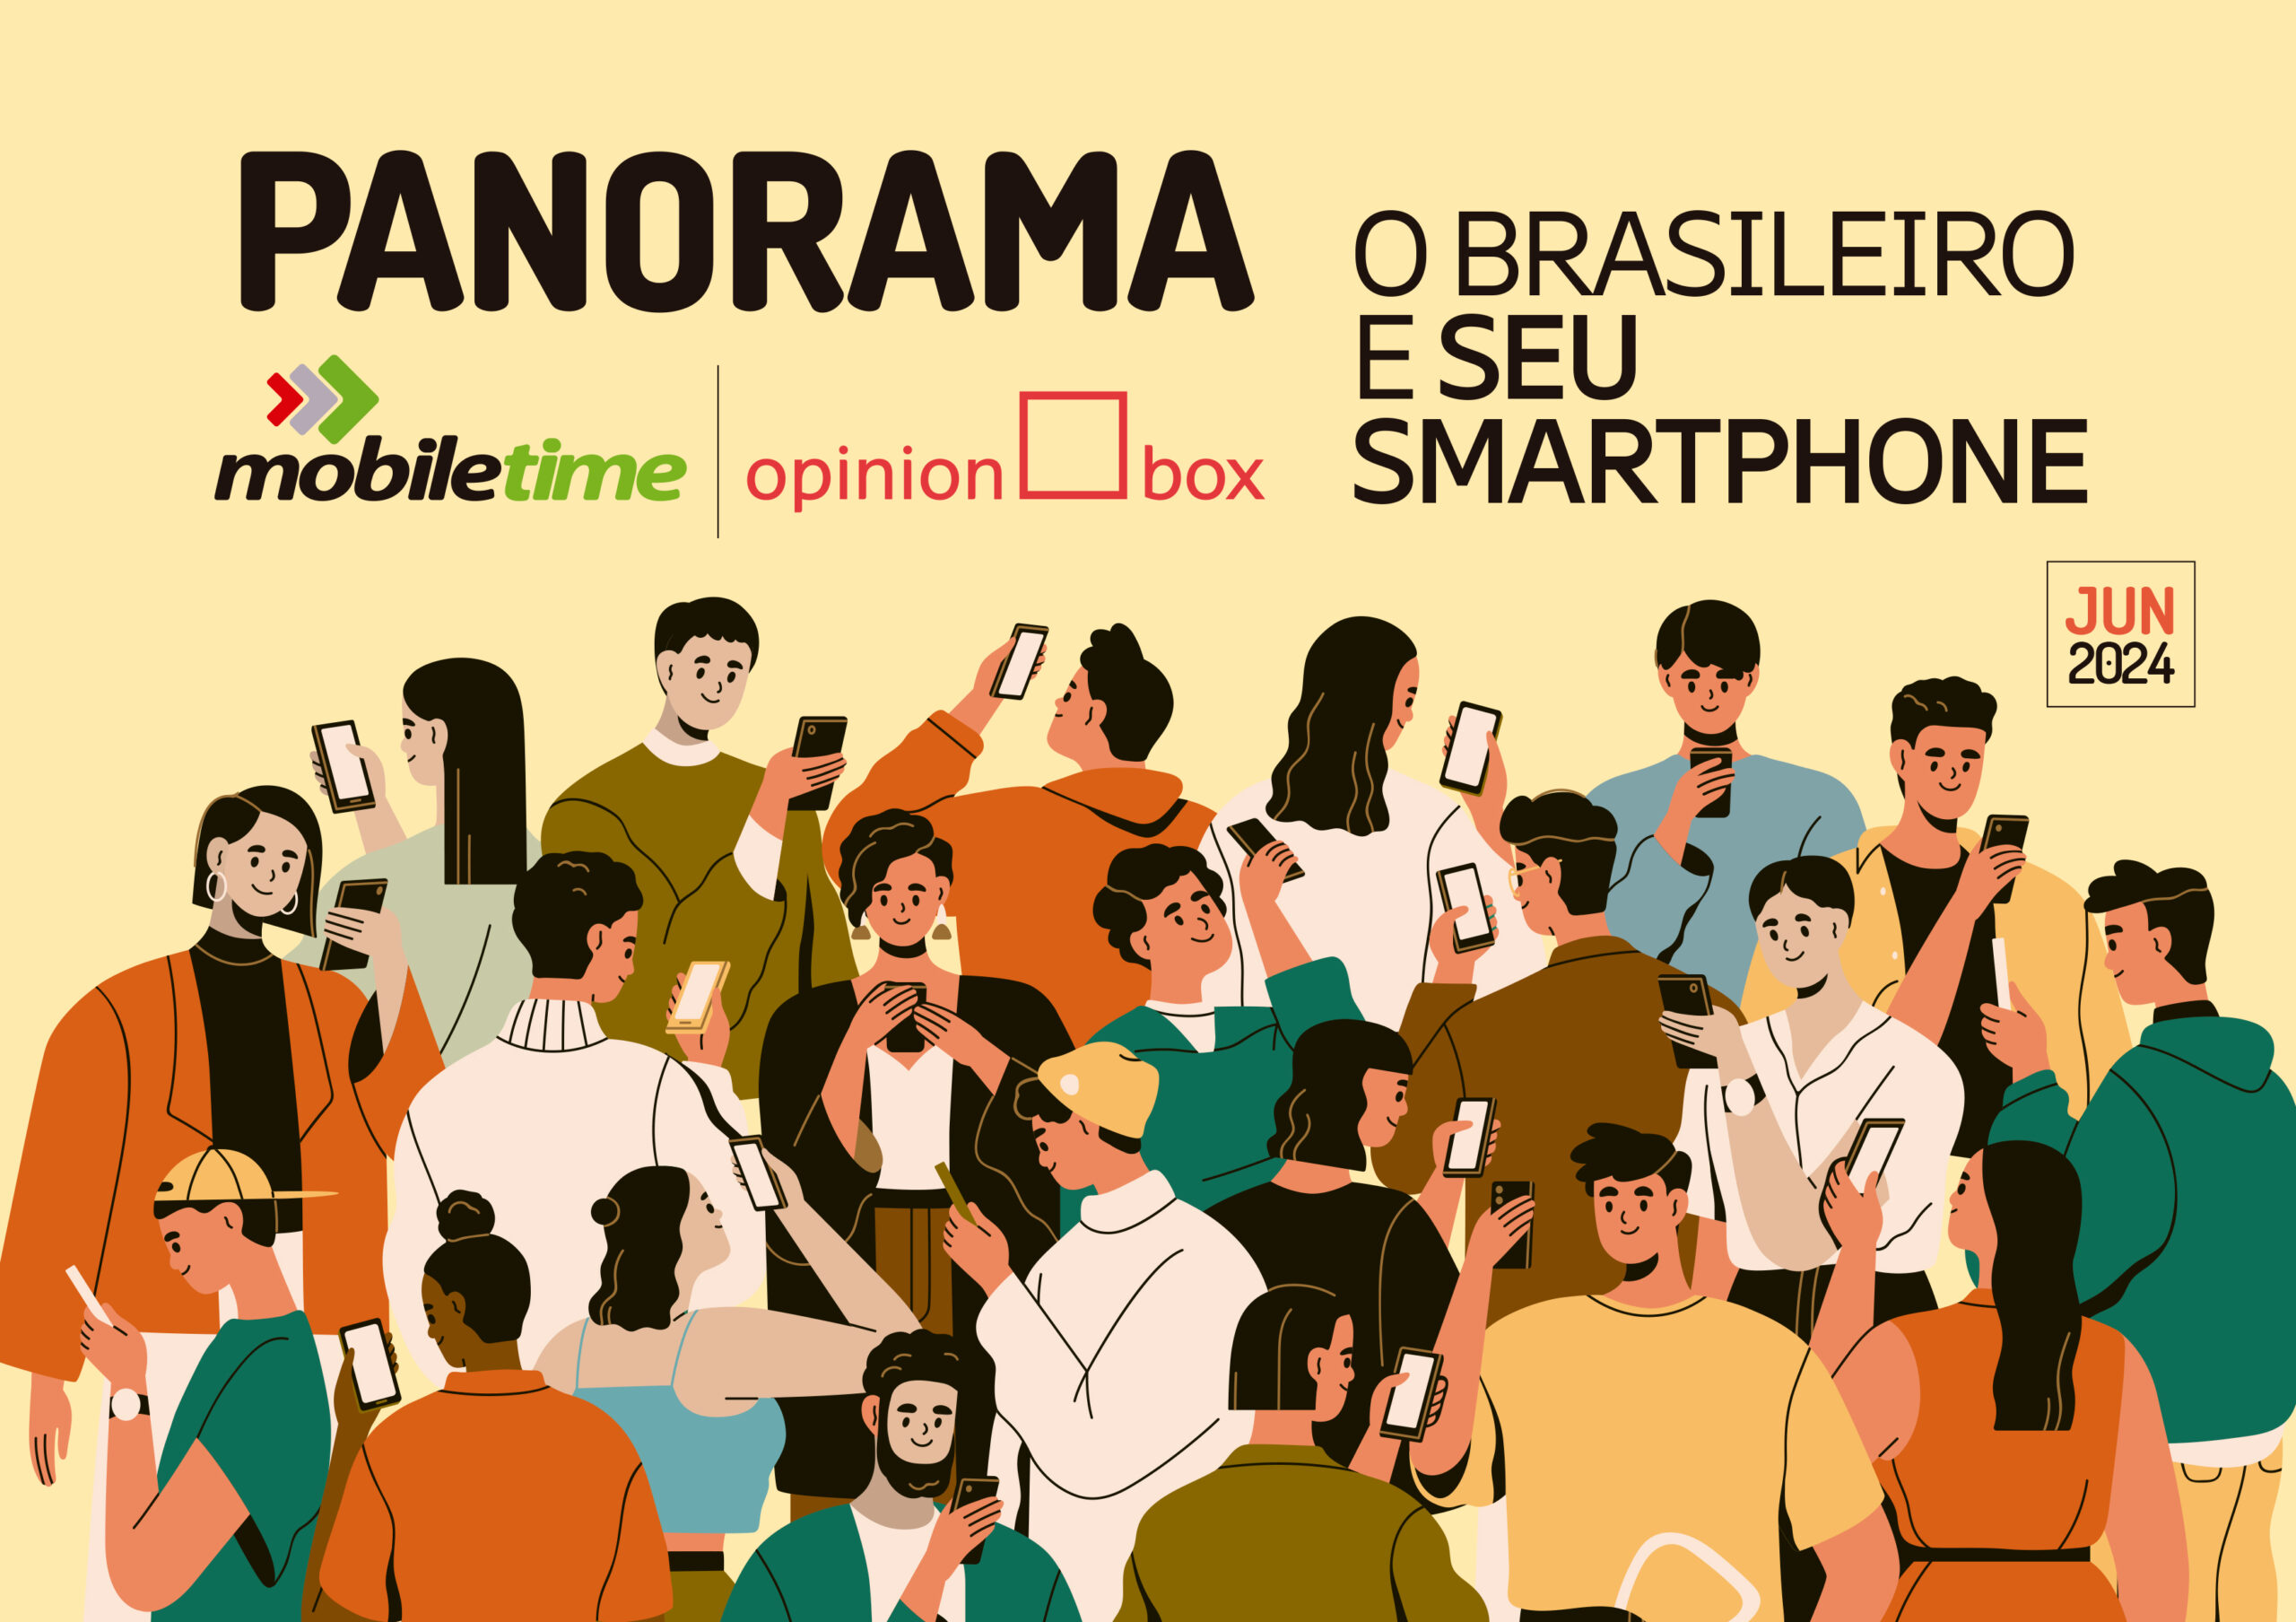 Brasileiro e seu smartphone